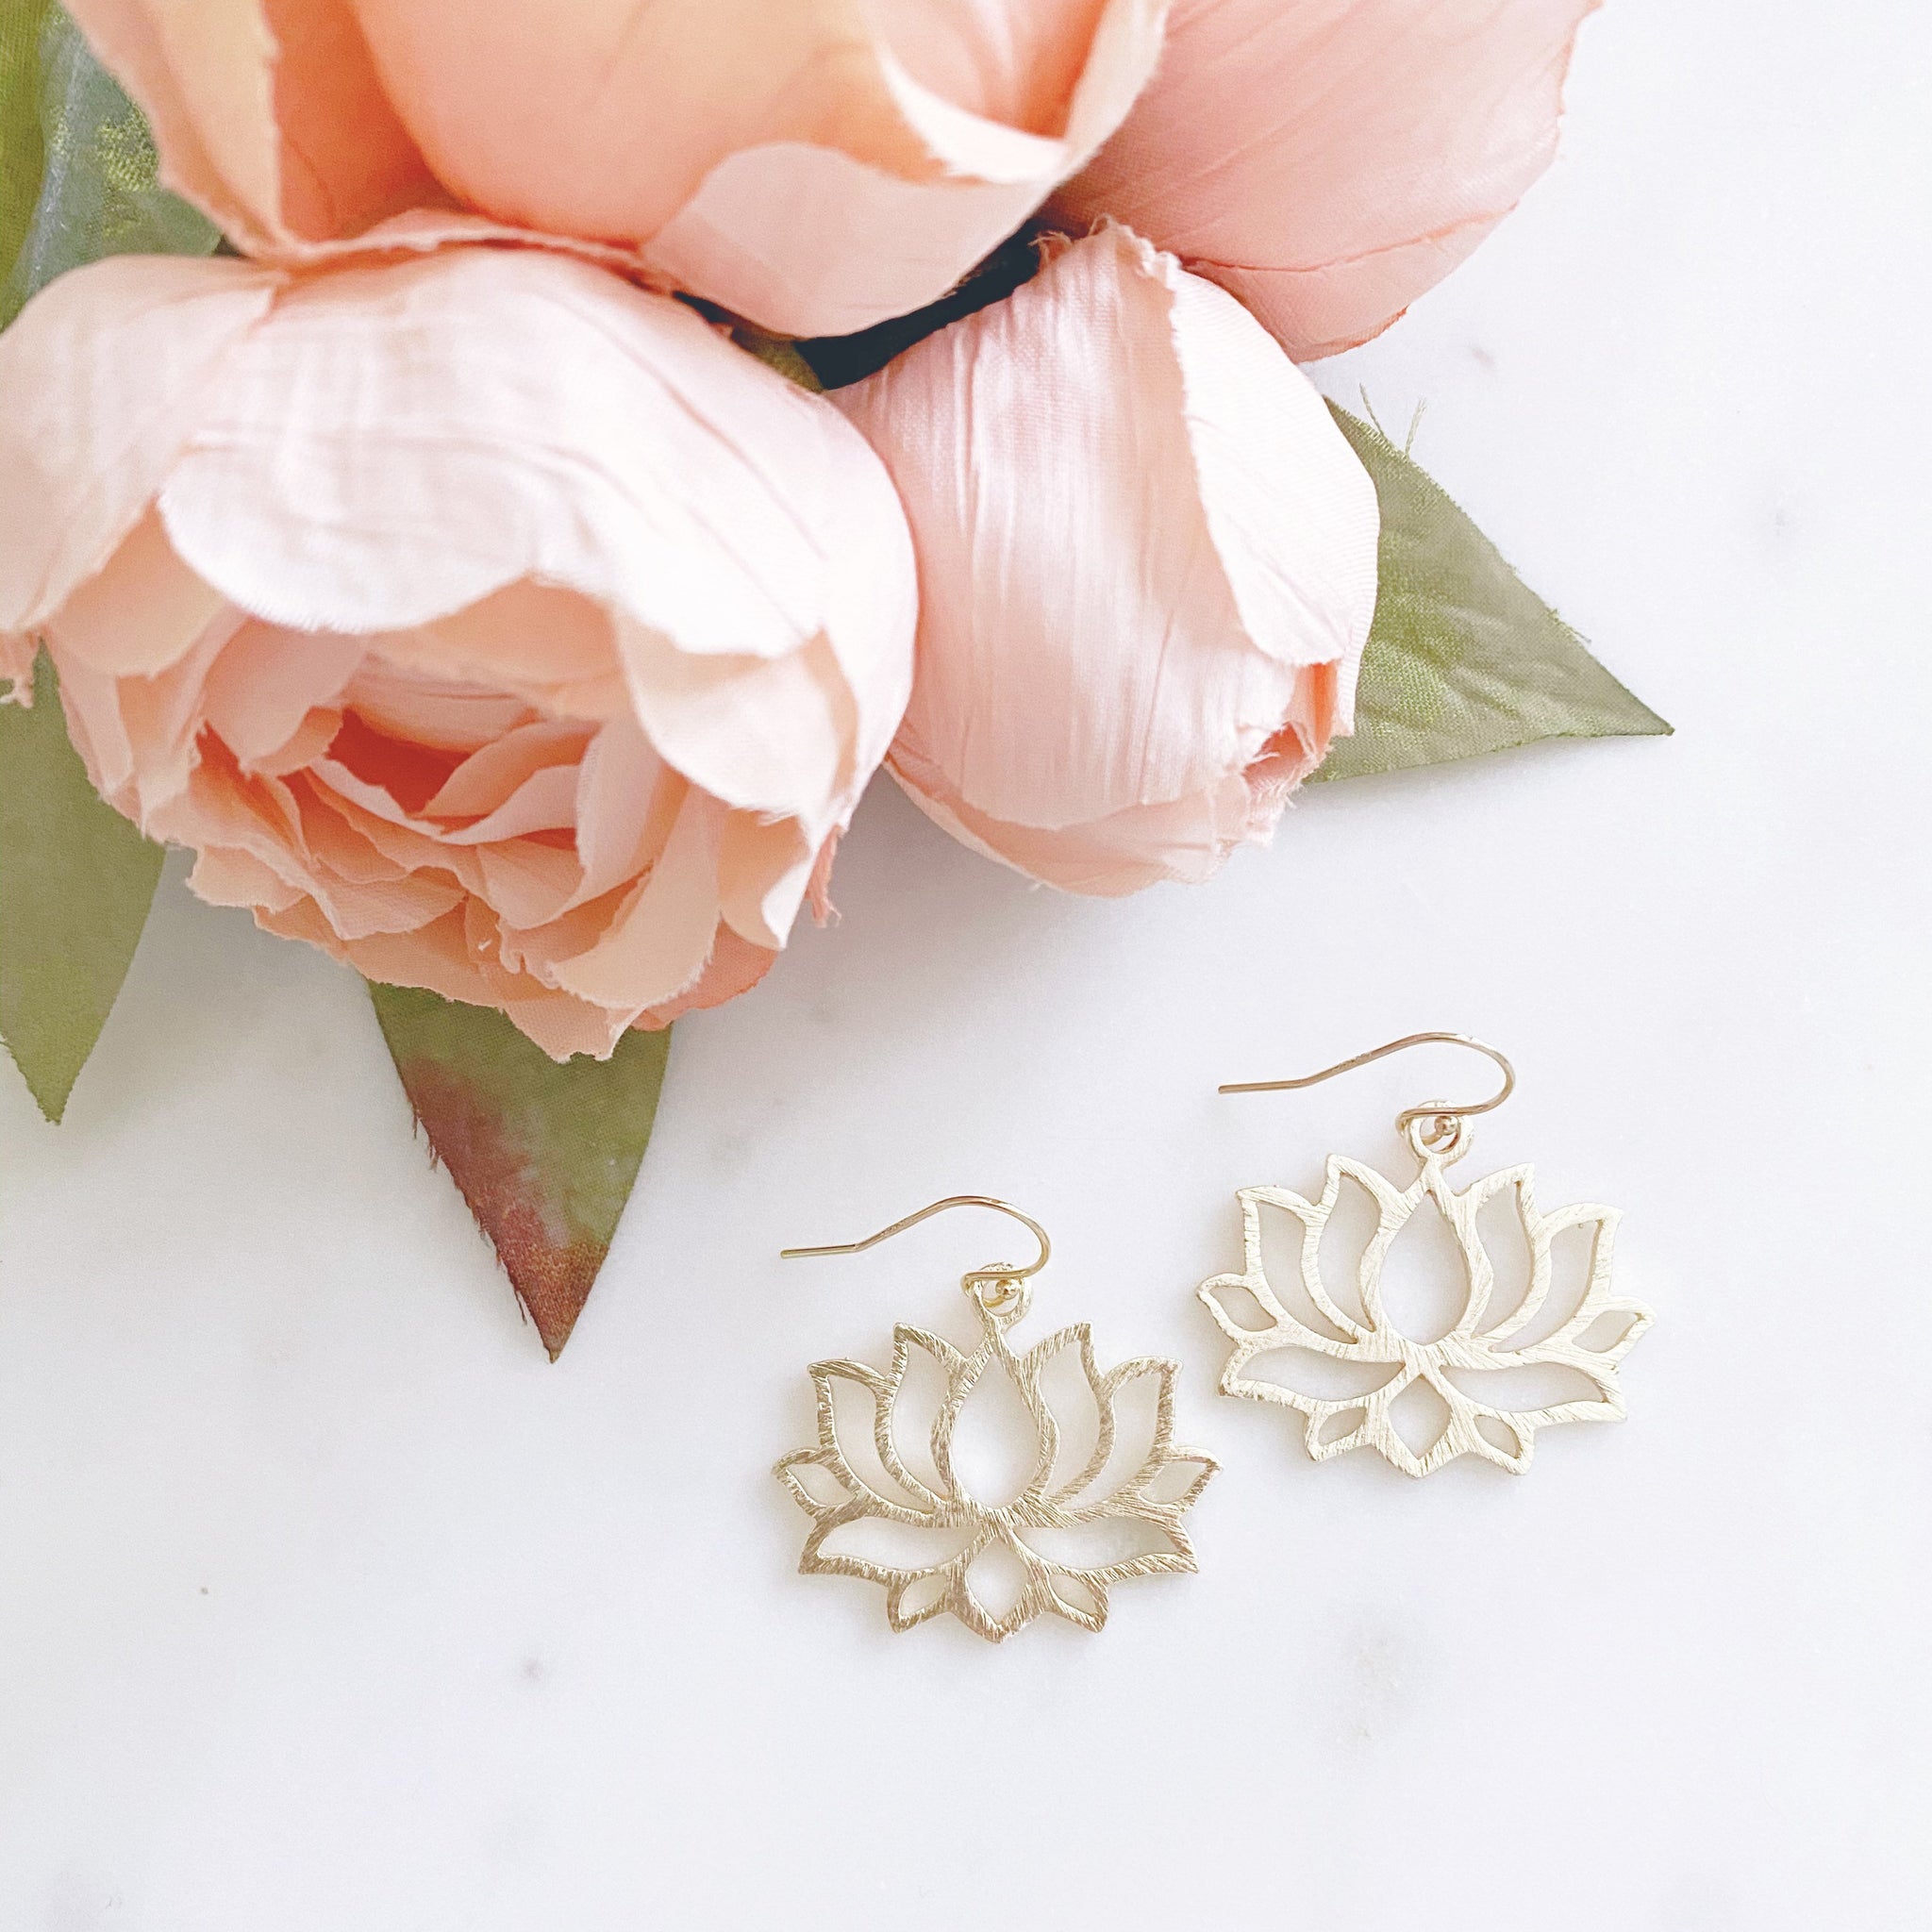 Lotus Earrings, Flower Earrings, Gold Dangle Earrings, Best Friend Gifts, Birthday Gifts for Her, LUCY